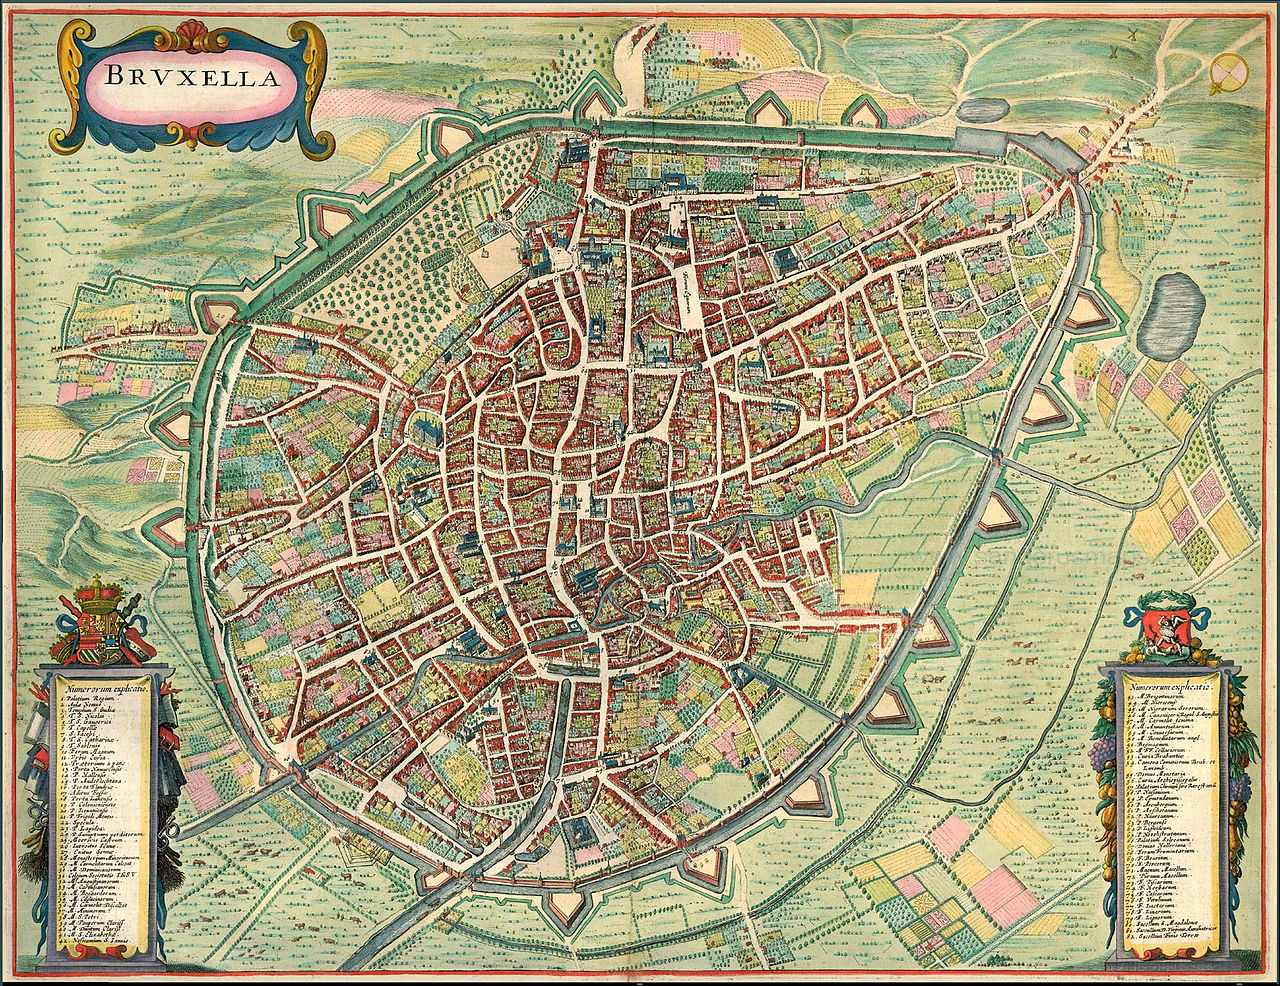 "Brussel 1657 Janssonius" by Janssonius, Johannes - Sanderusmaps. Licensed under Public Domain via Wikimedia Commons - https://commons.wikimedia.org/wiki/File:Brussel_1657_Janssonius.jpg#/media/File:Brussel_1657_Janssonius.jpg